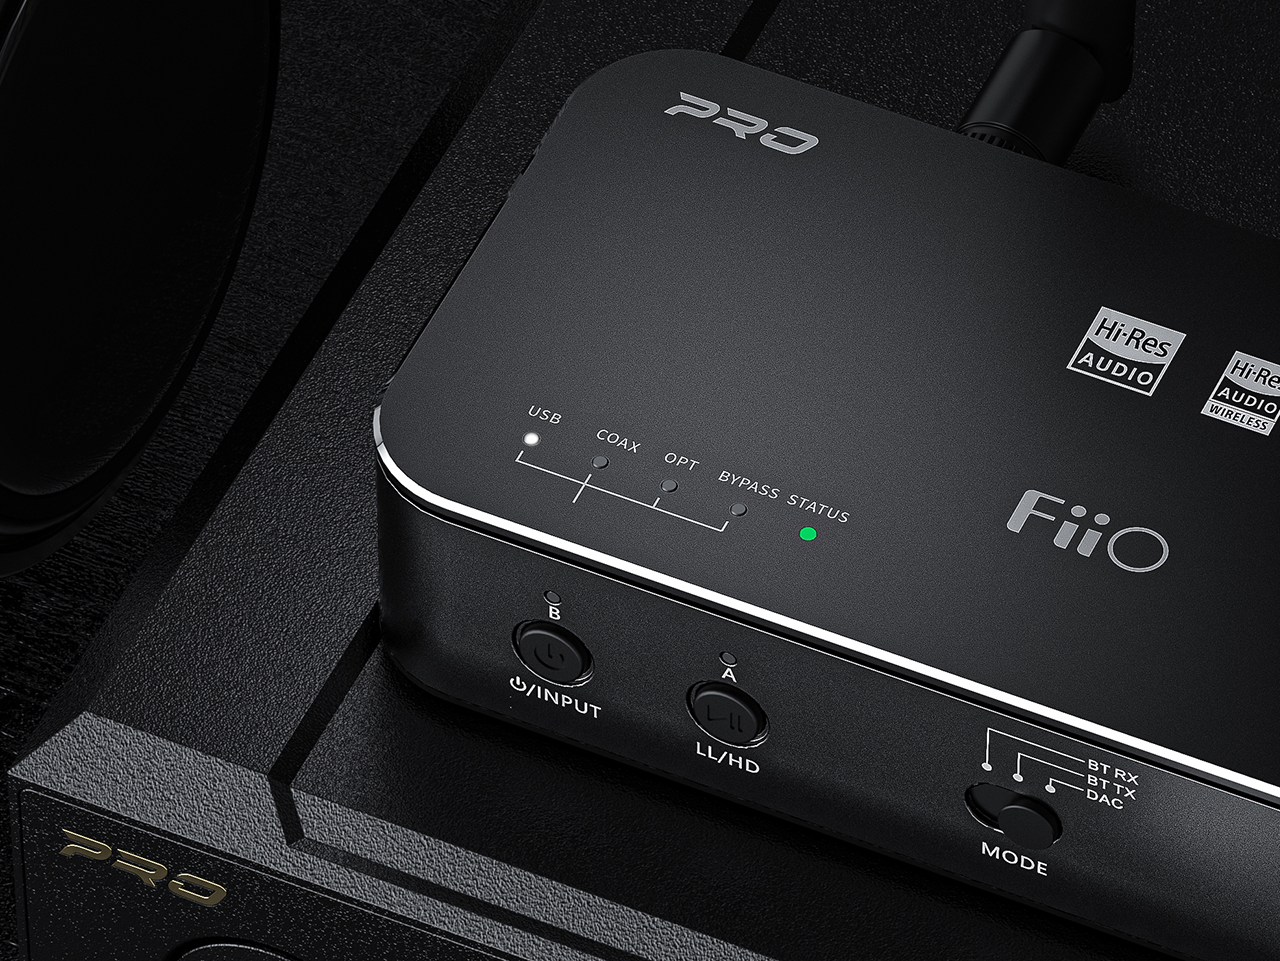 Fiio Bluetooth BTA30 Pro USB DAC レシーバー